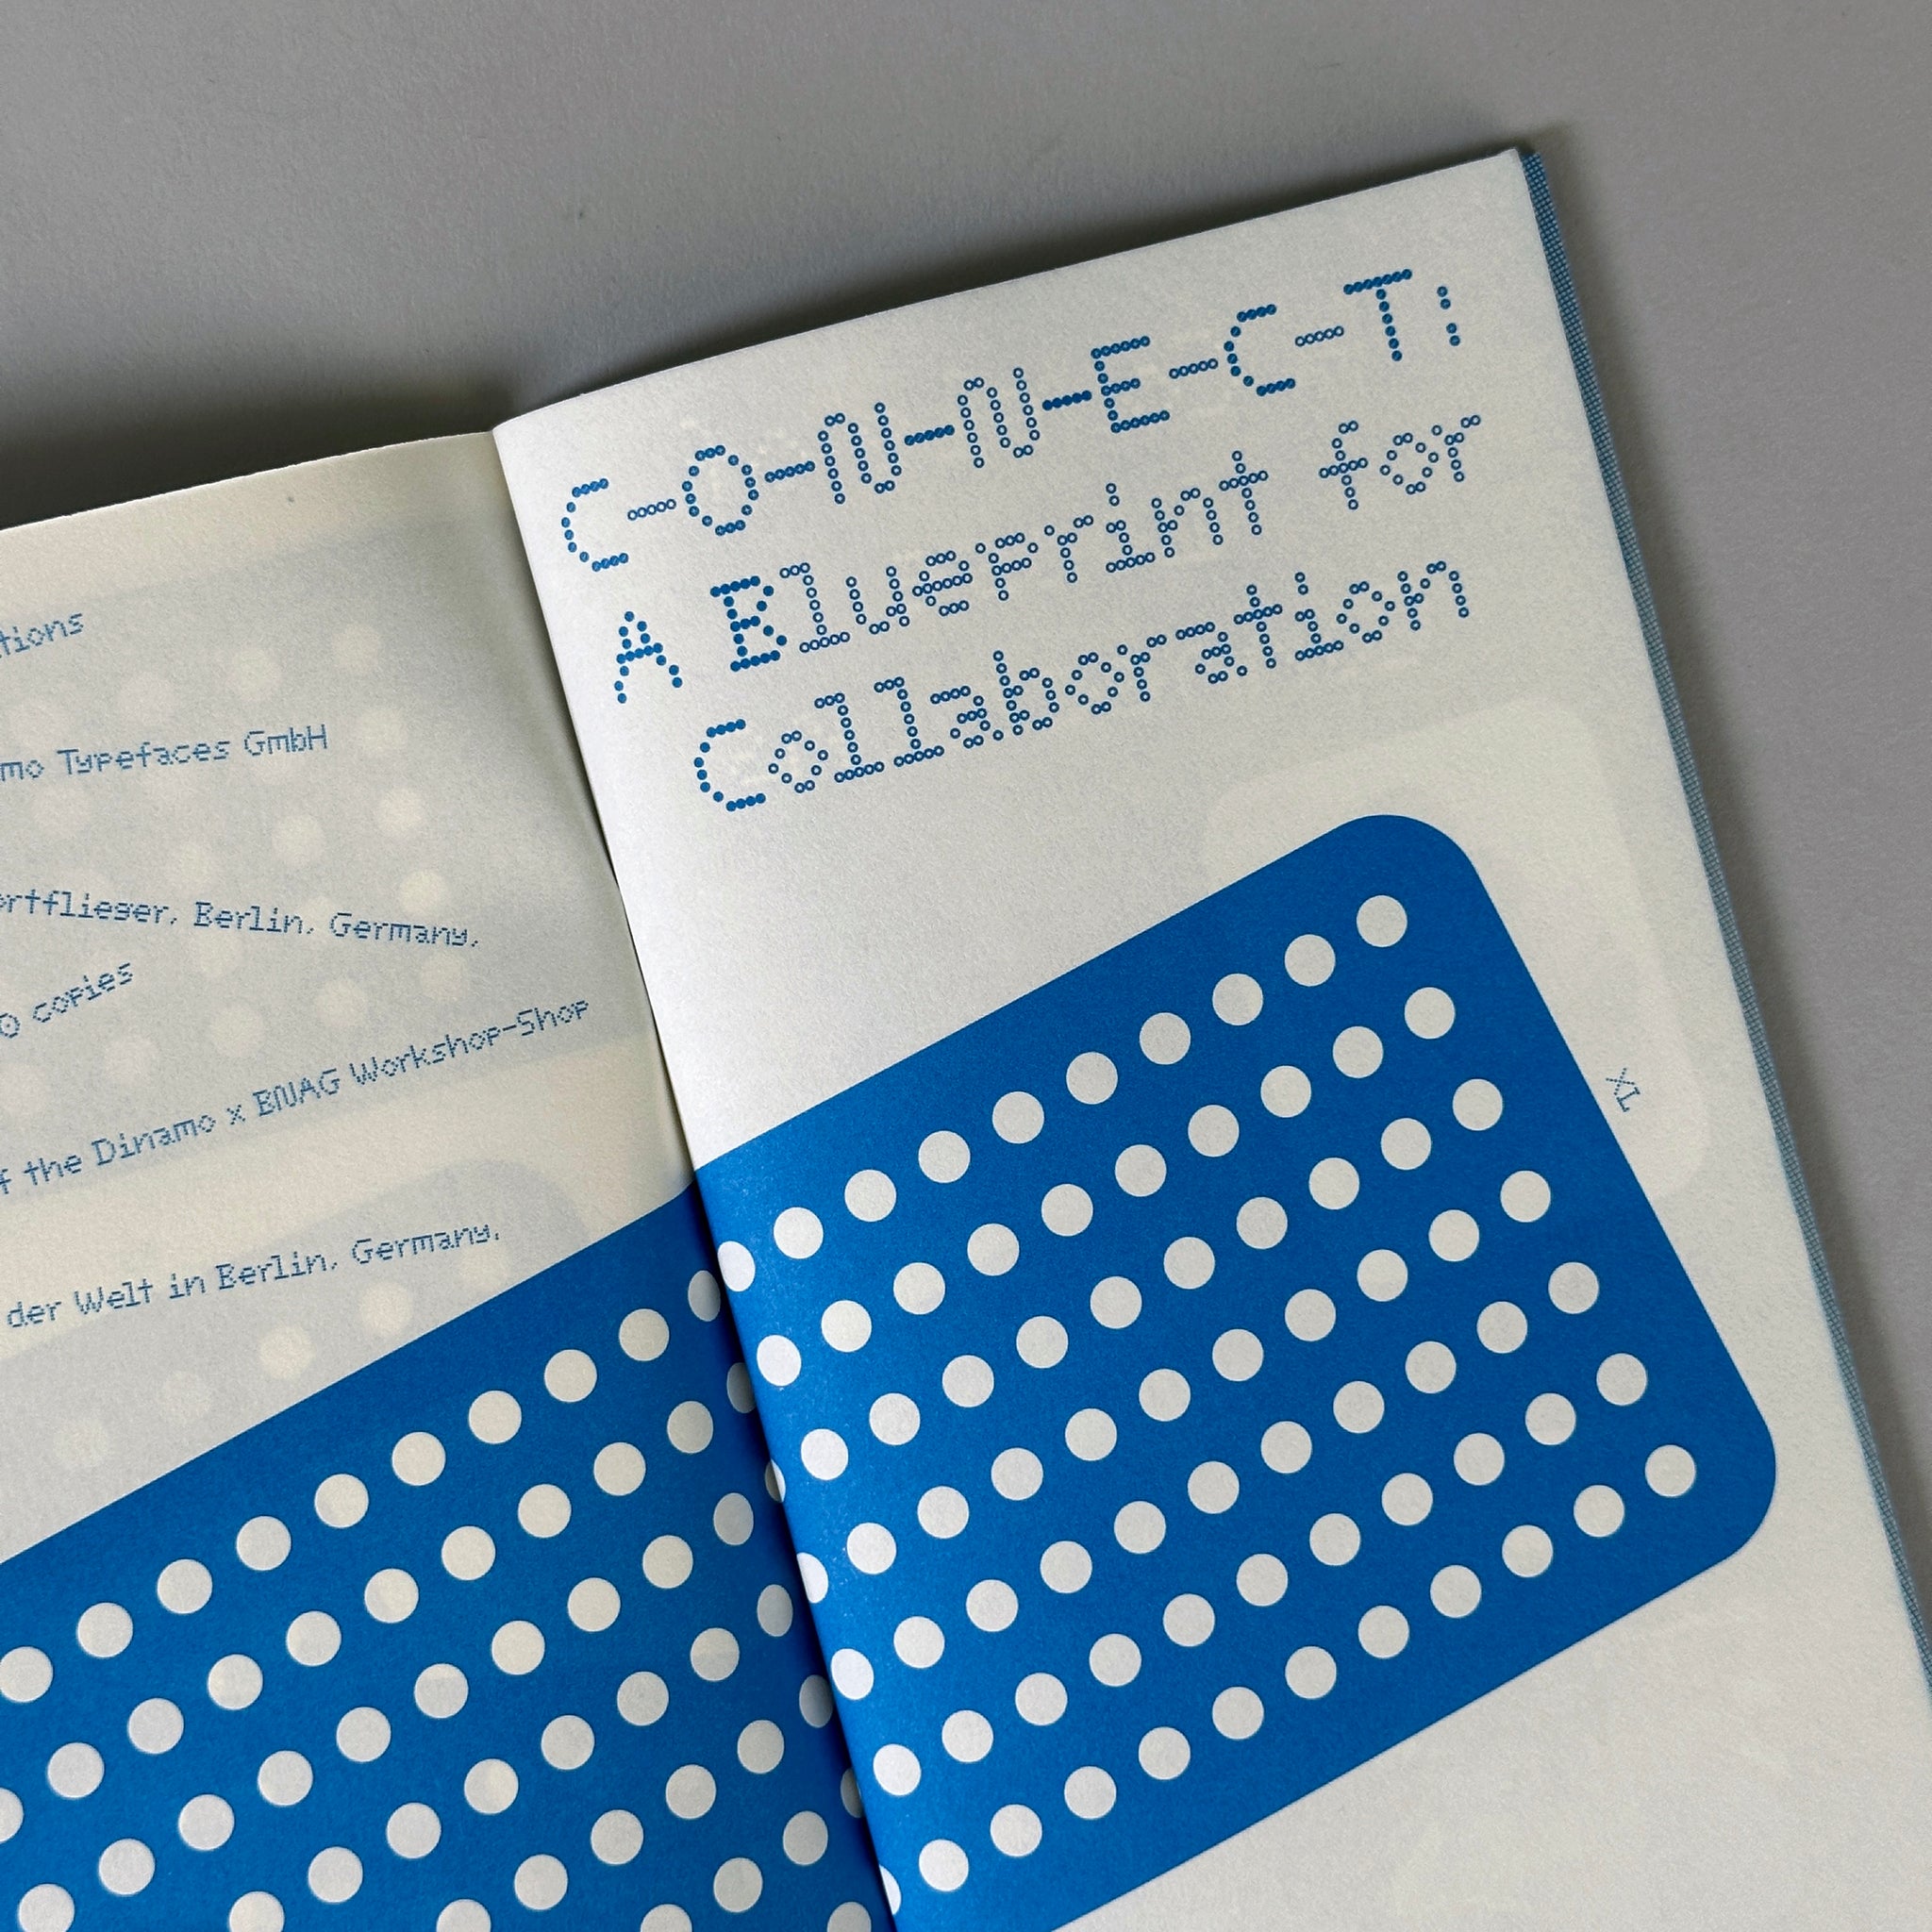 C-O-N-N-E-C-T: A Blueprint for Collaboration